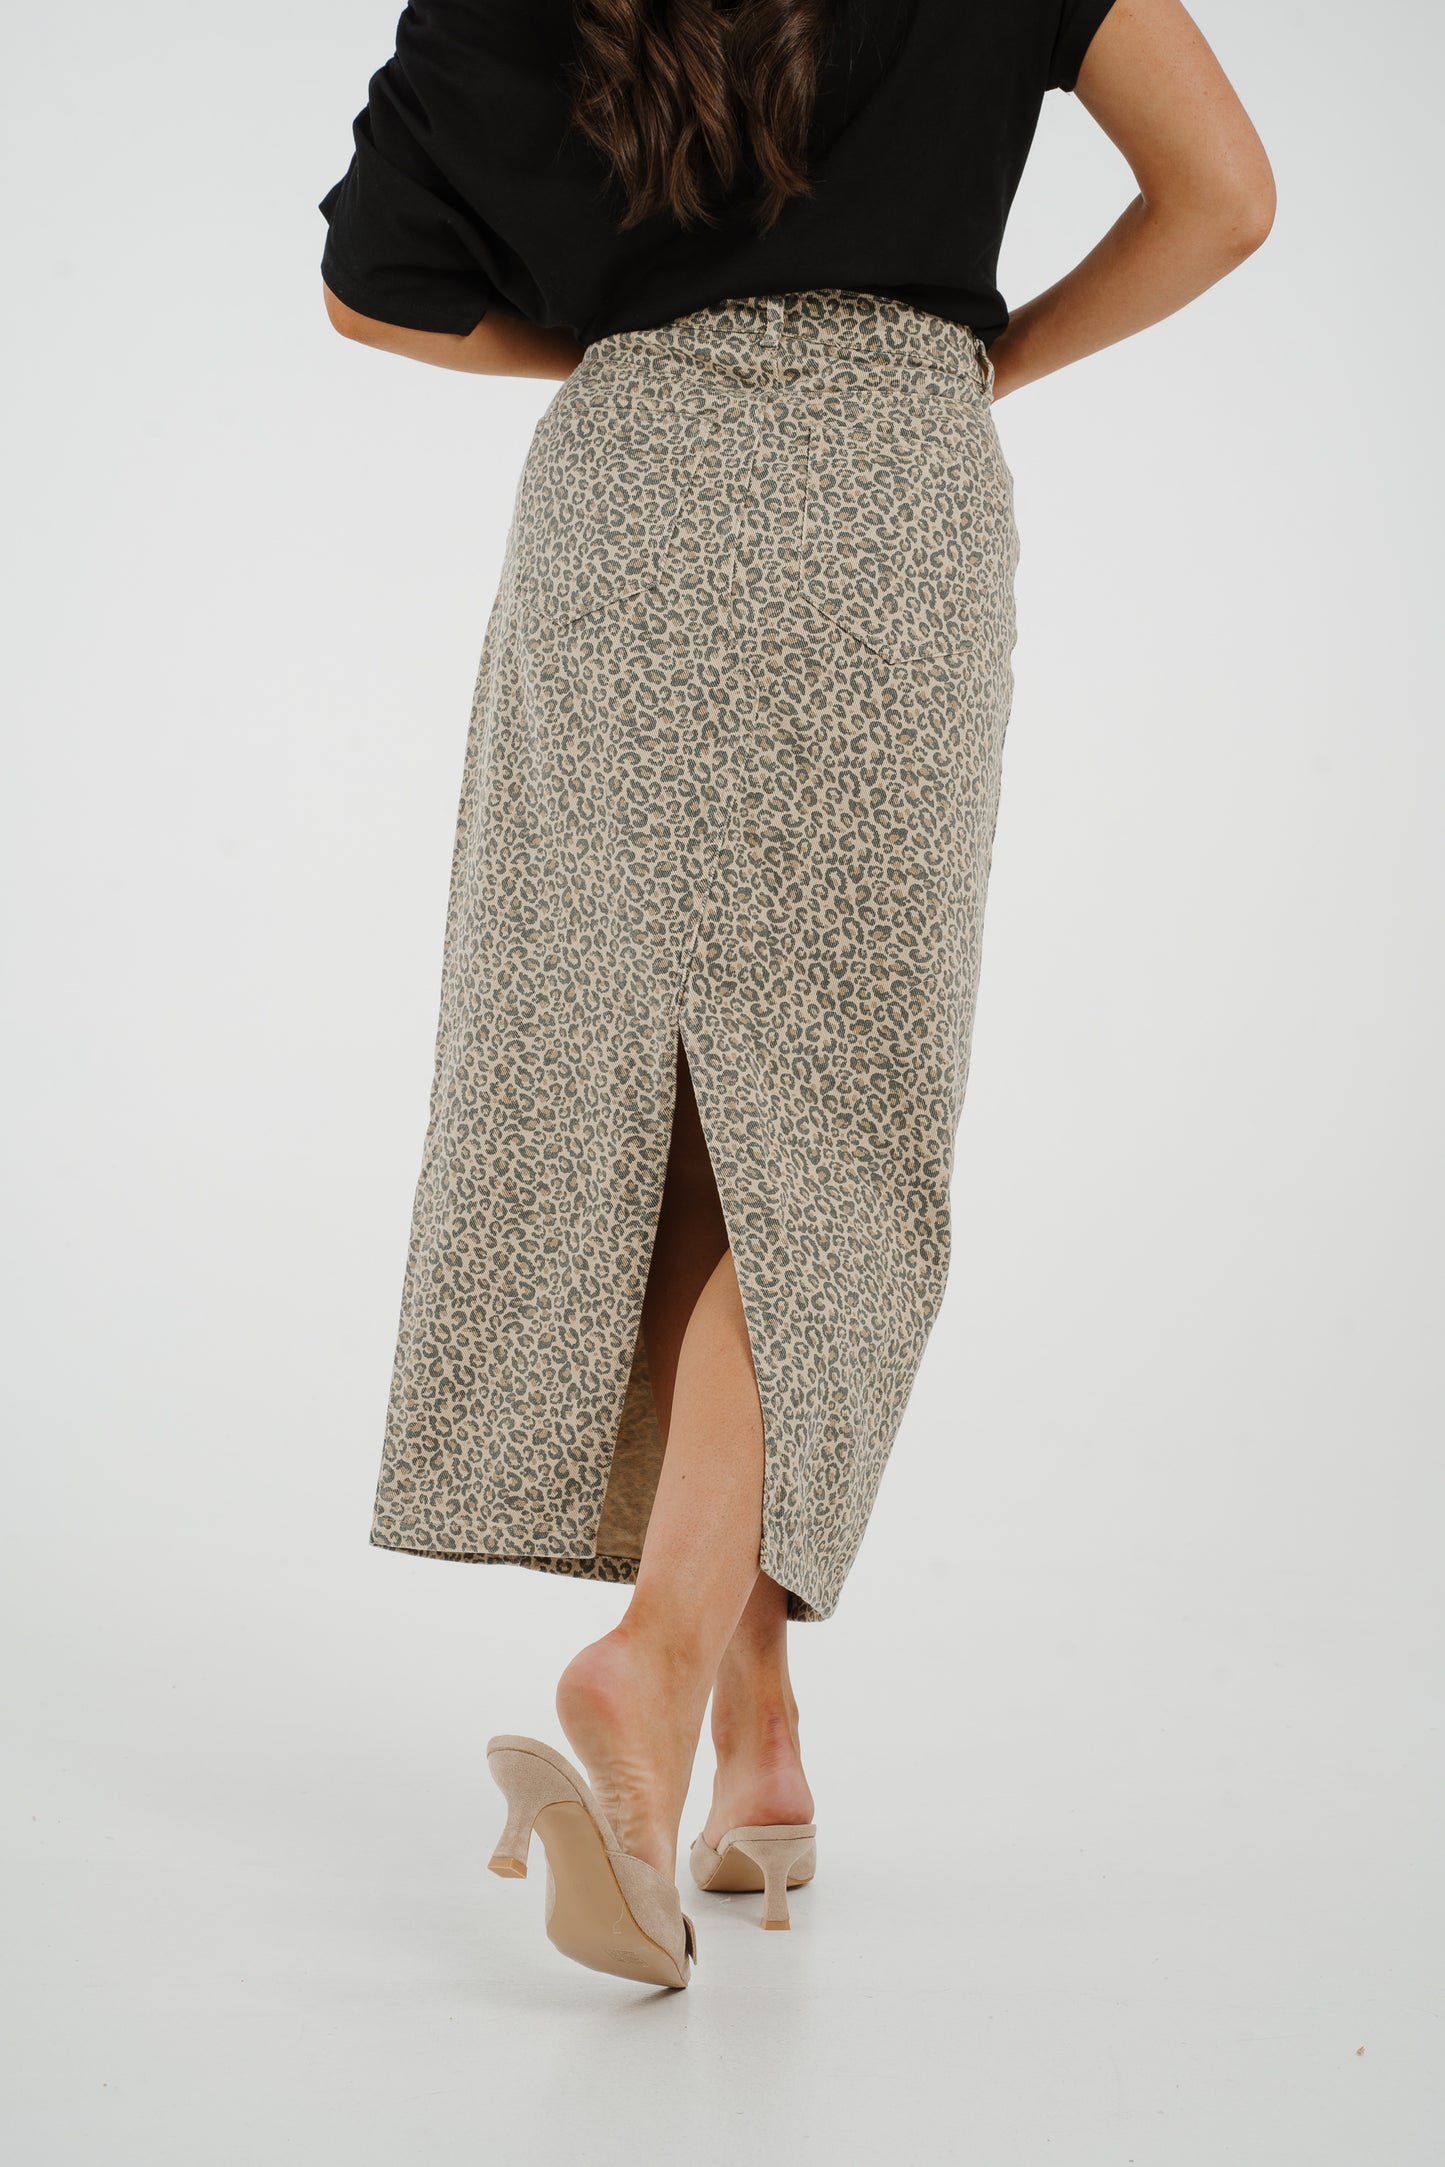 Cora Denim Maxi Skirt In Leopard Print